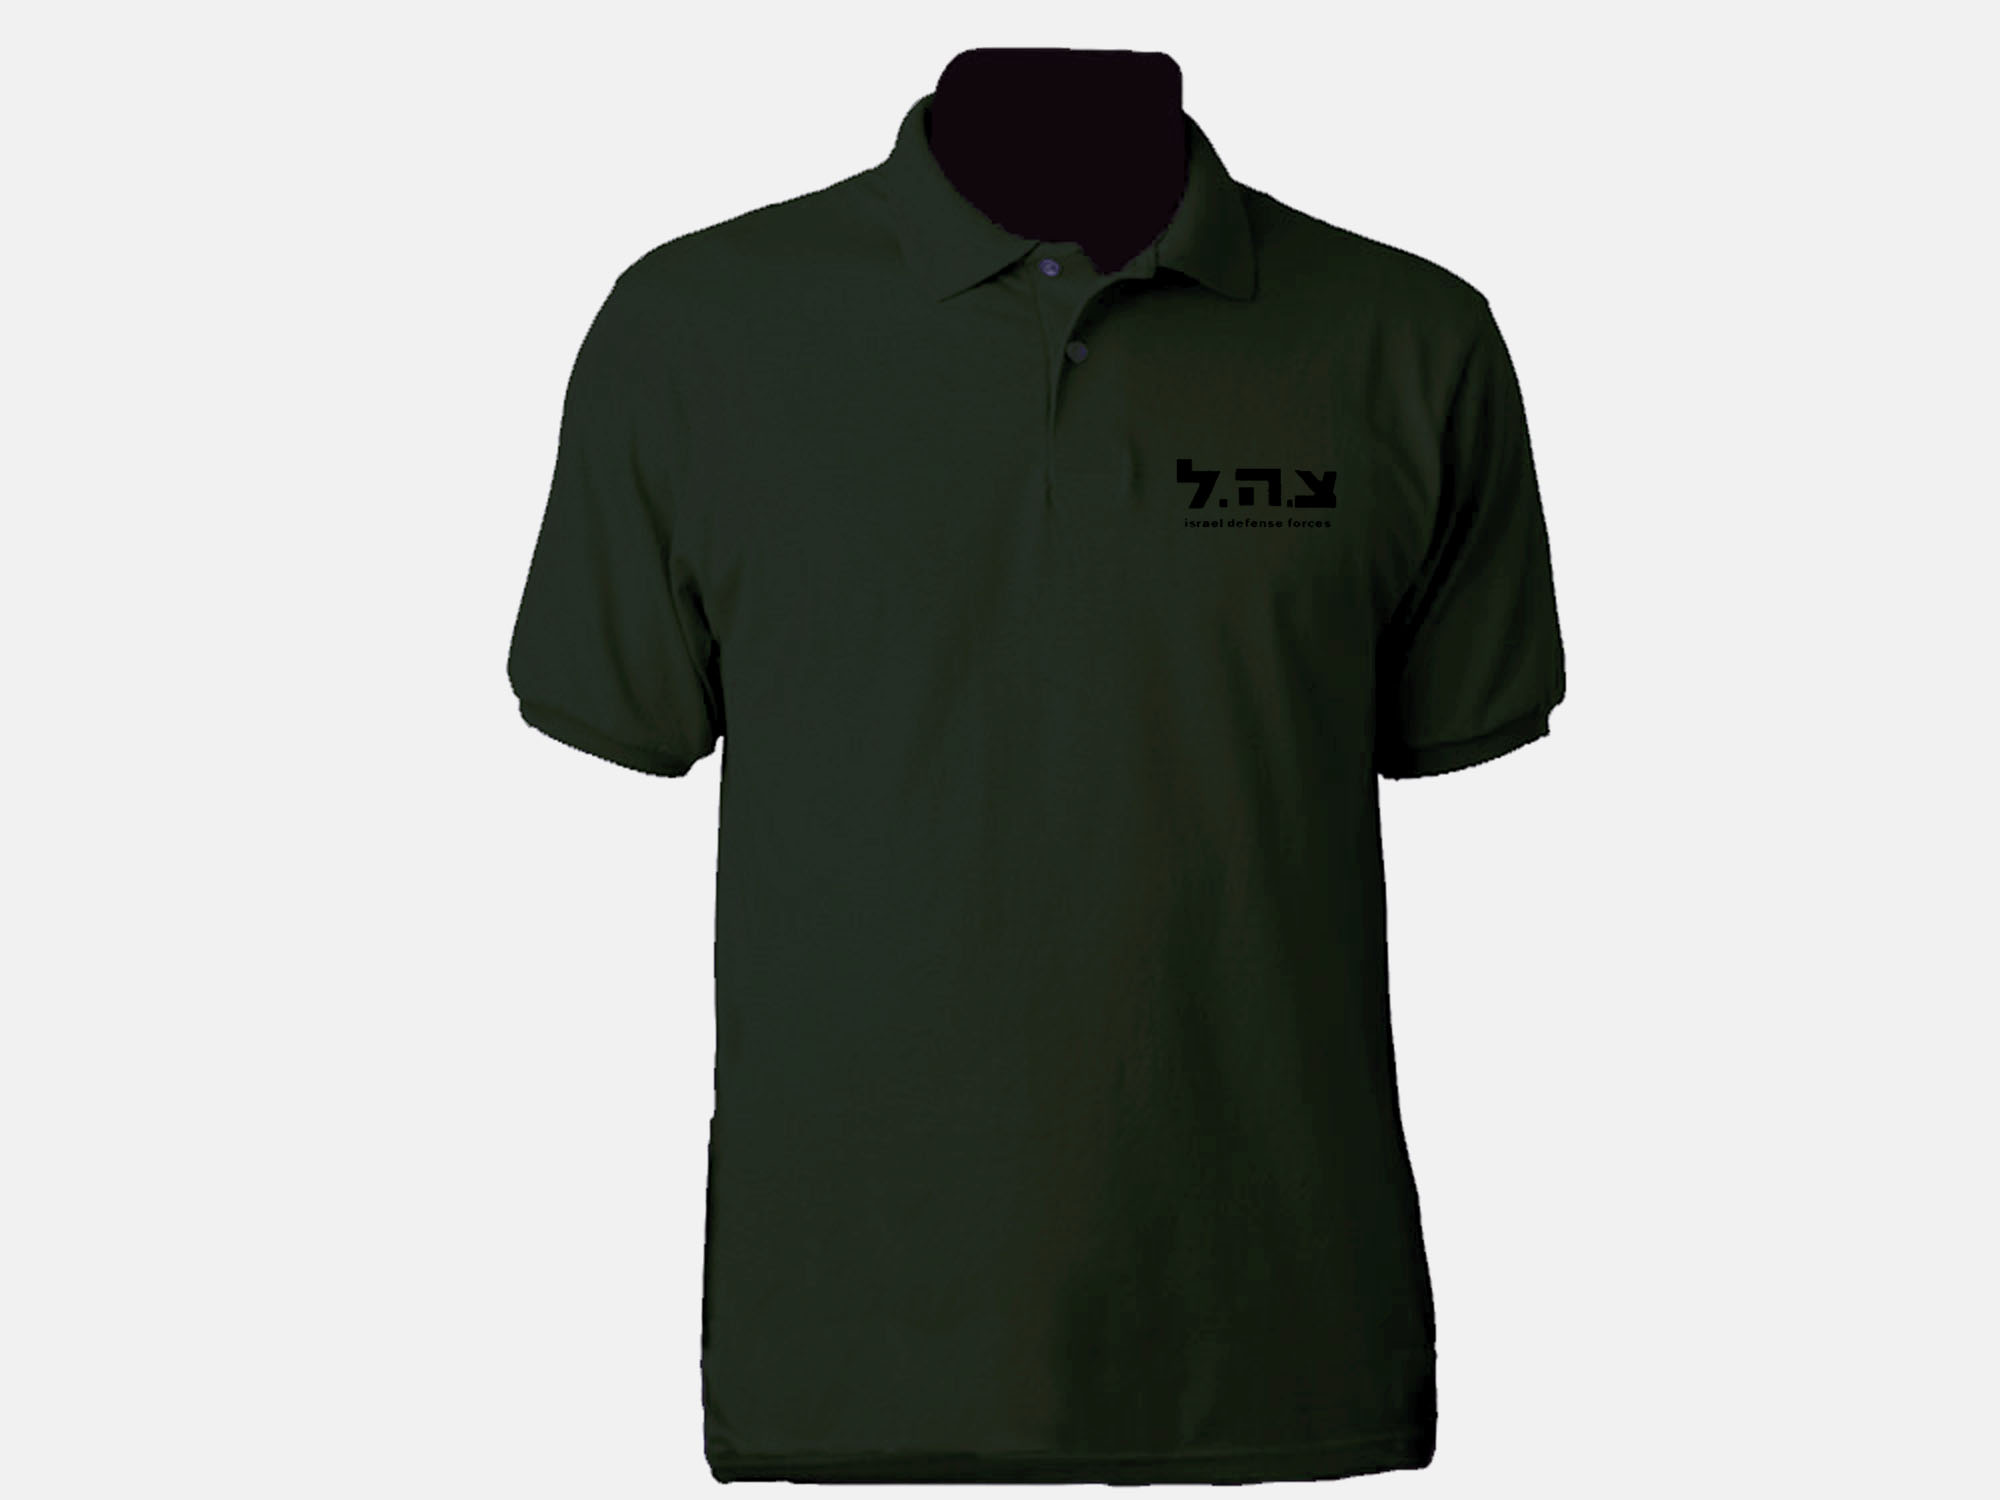 IDF zahal Hebrew Israel army polo style sweat proof fabric t-shirt